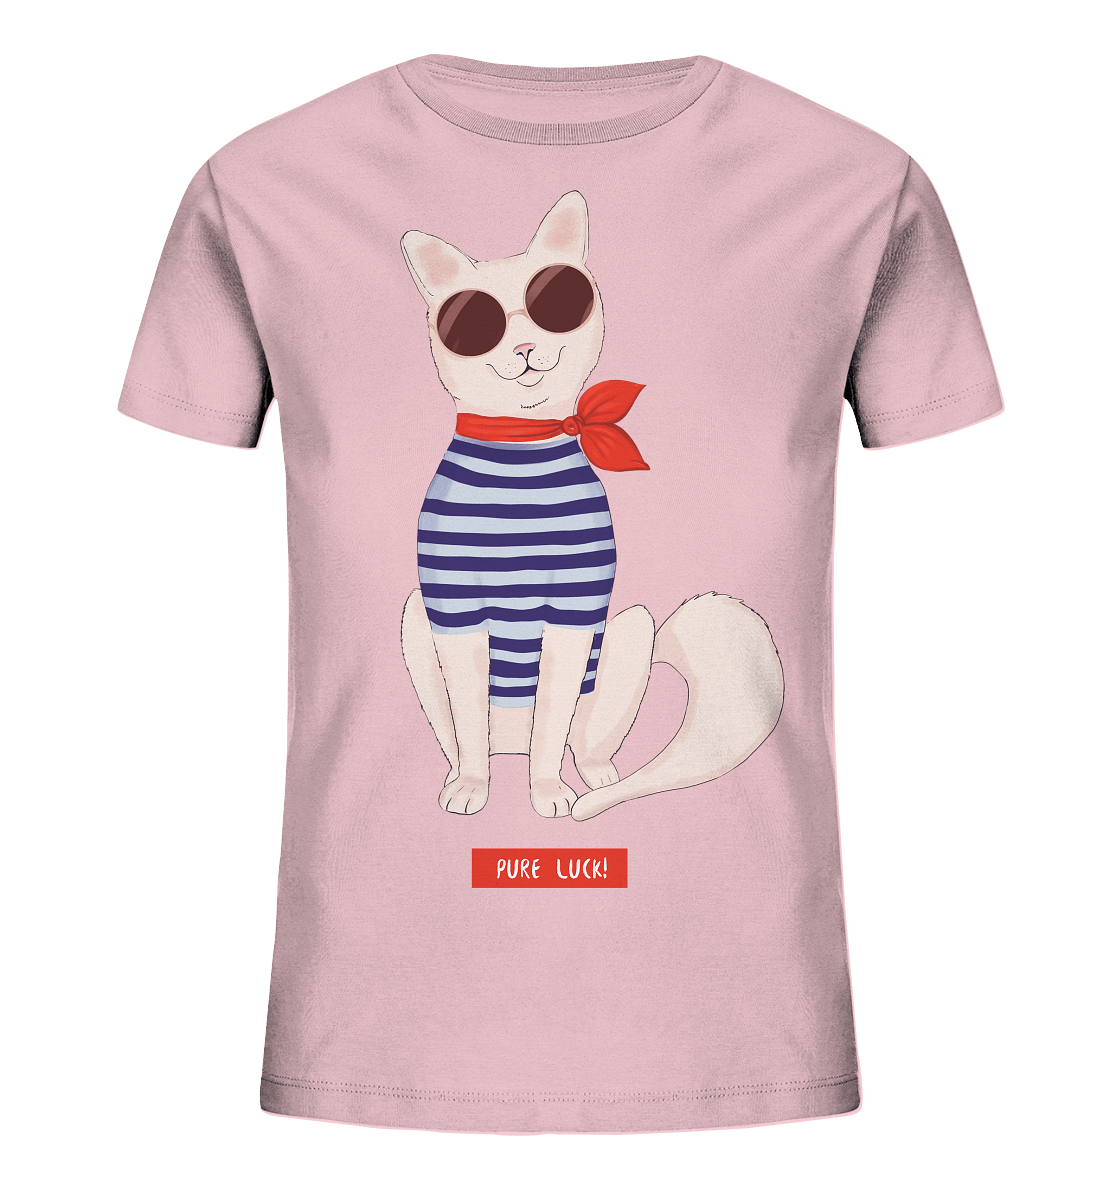 Maritime Katze Comic Kinder Shirt in rosa mit Streifenhemd mit Sonnebrille Katzen